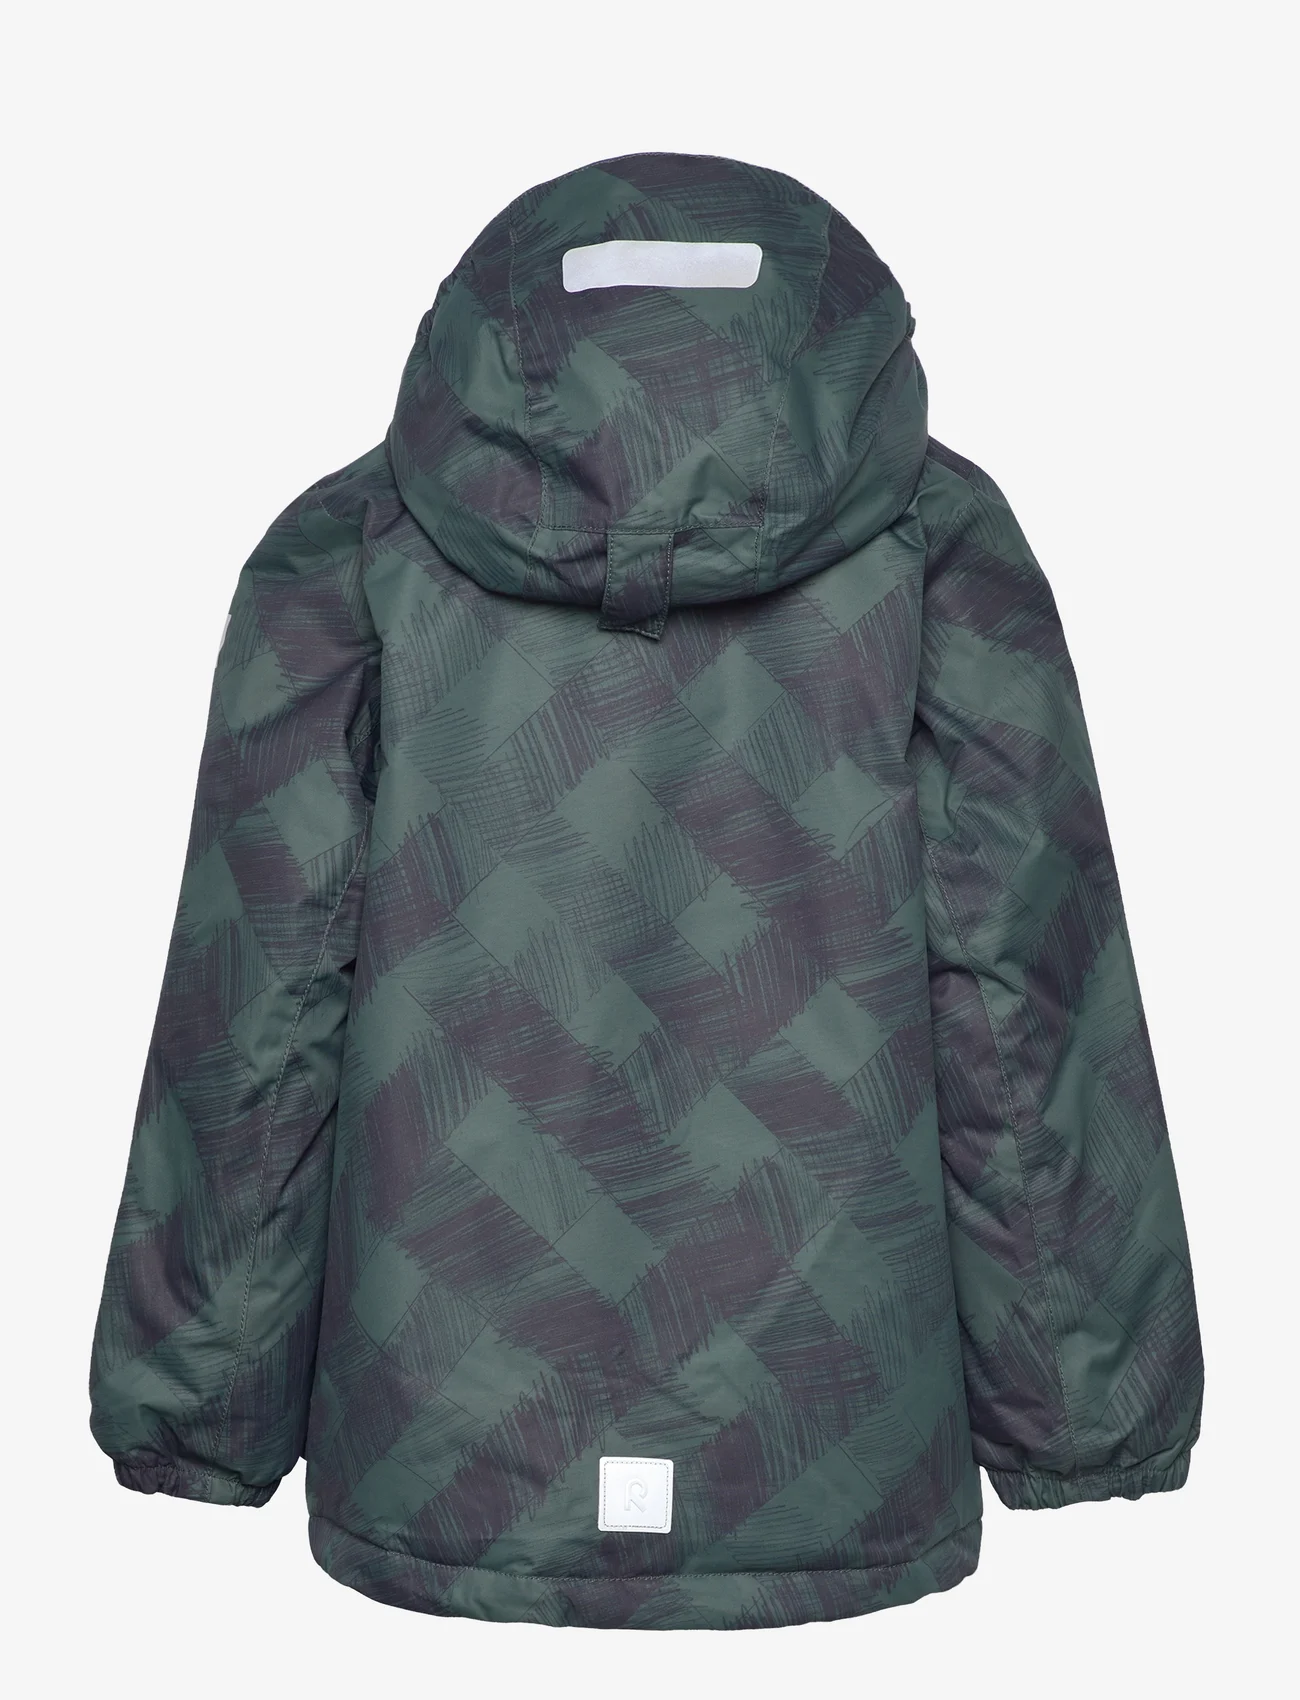 Reima - Winter jacket, Nuotio - vinterjackor - thyme green - 1